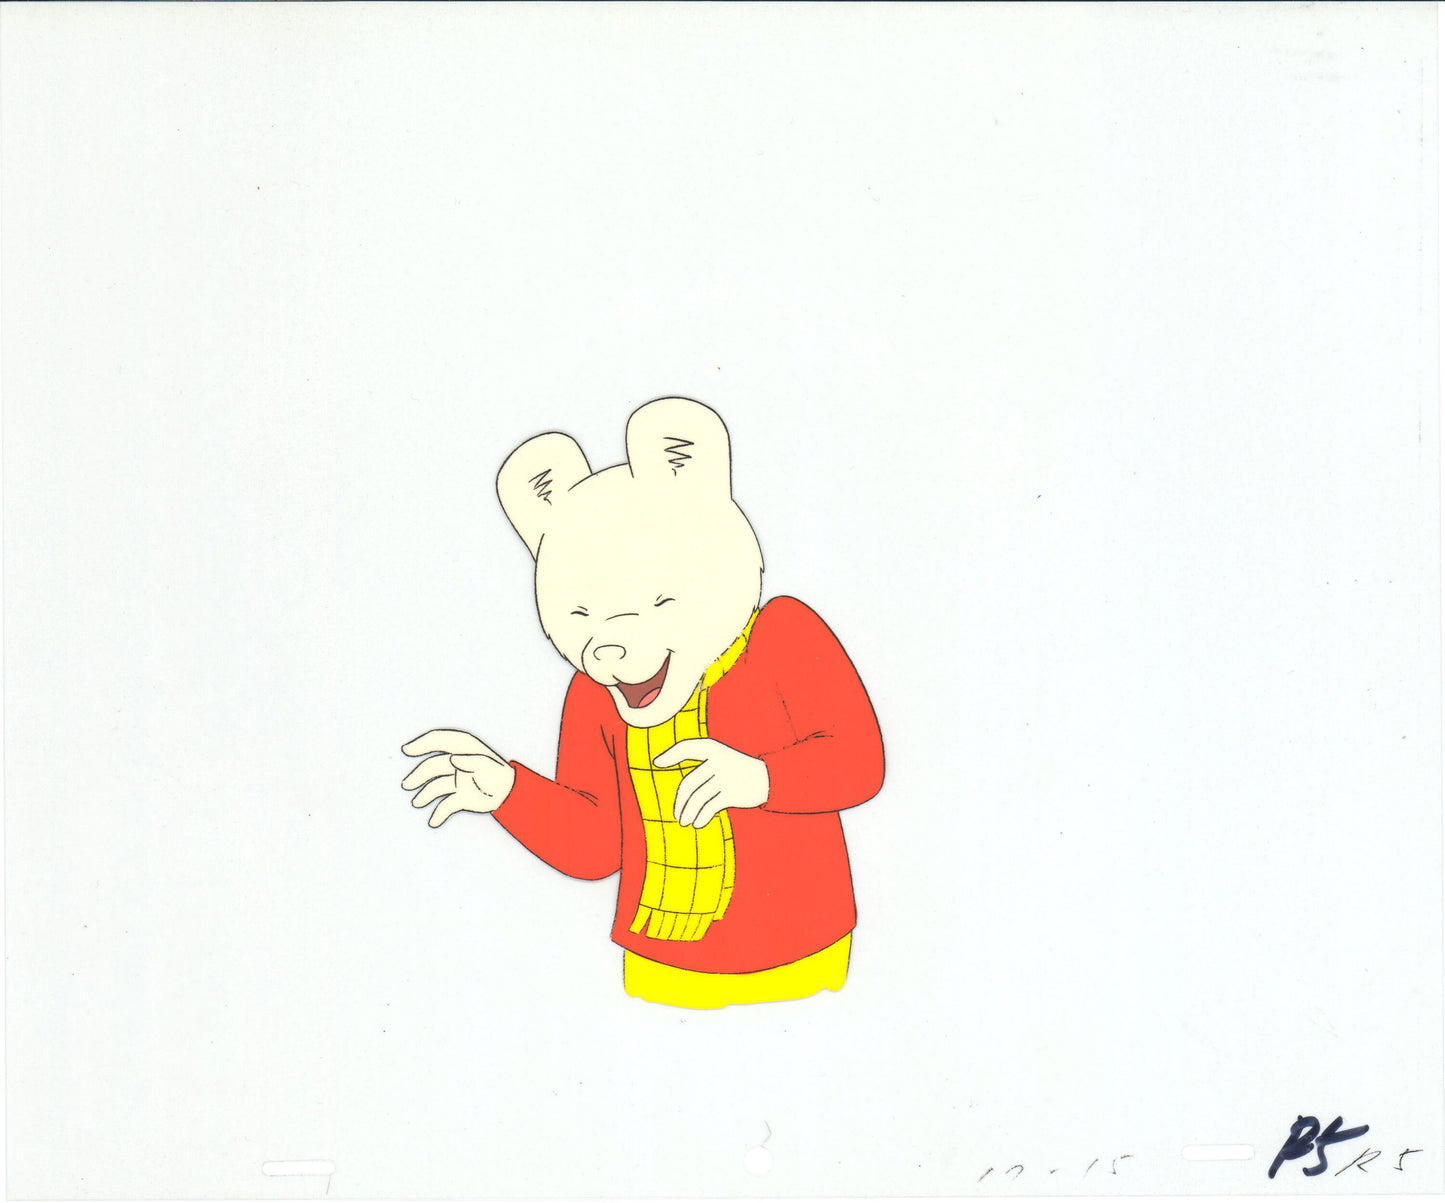 RUPERT Bear Original Production Animation Cel from the Cartoon by Nelvana Tourtel Animation 1990s B70181